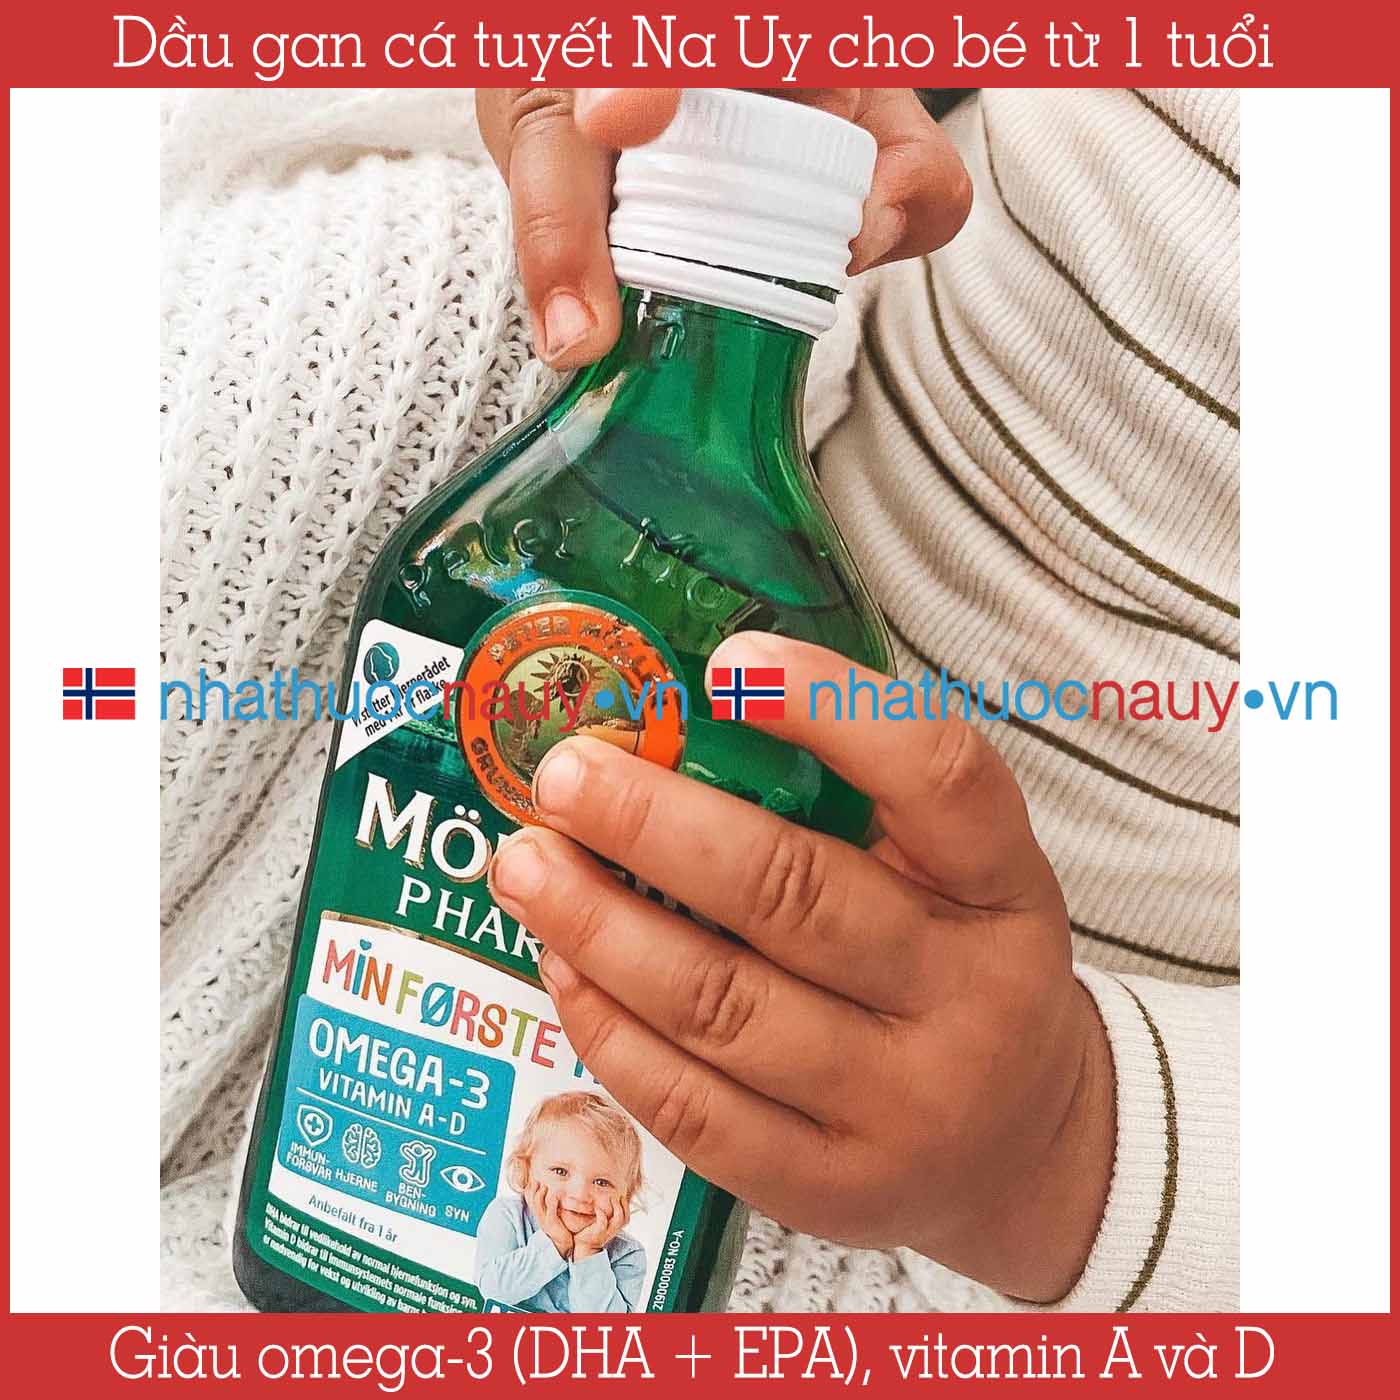 Möller's Pharma Min første tran Dầu gan cá tuyết NaUy cho bé từ 1 tuổi –  nhathuocnauy.vn